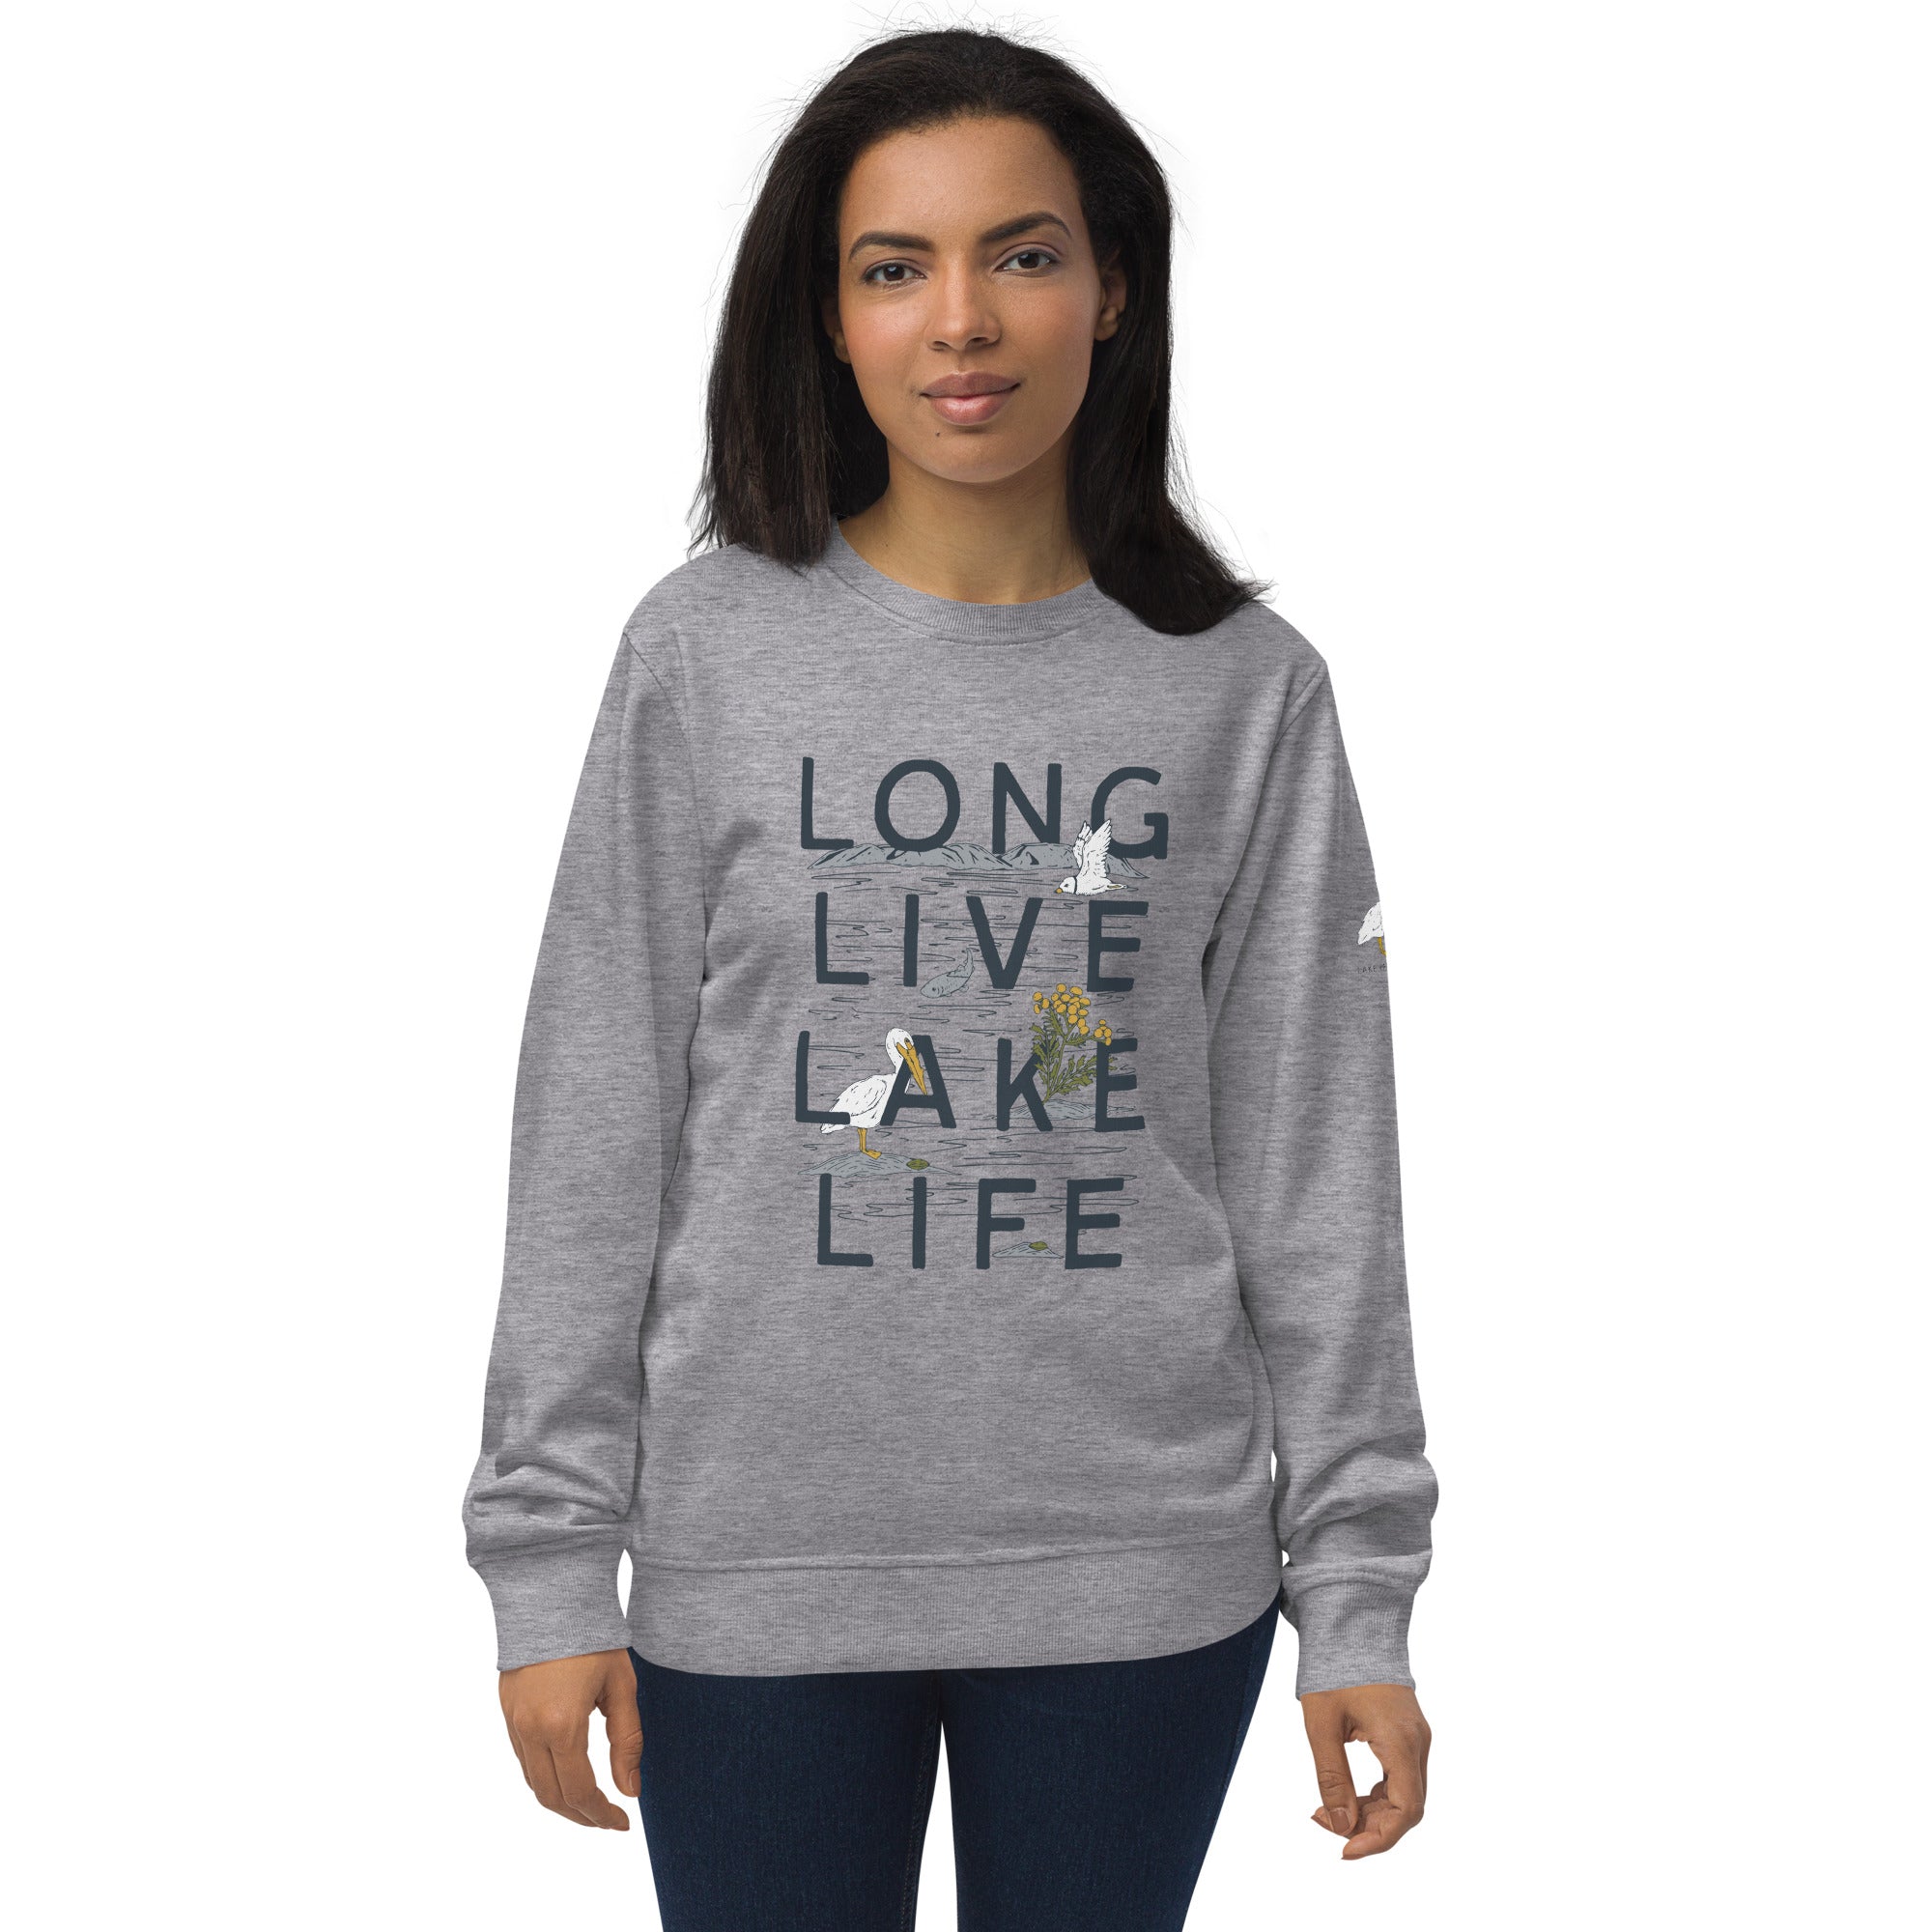 LONG LIVE LAKE LAKE Unisex Organic Crew Sweatshirt